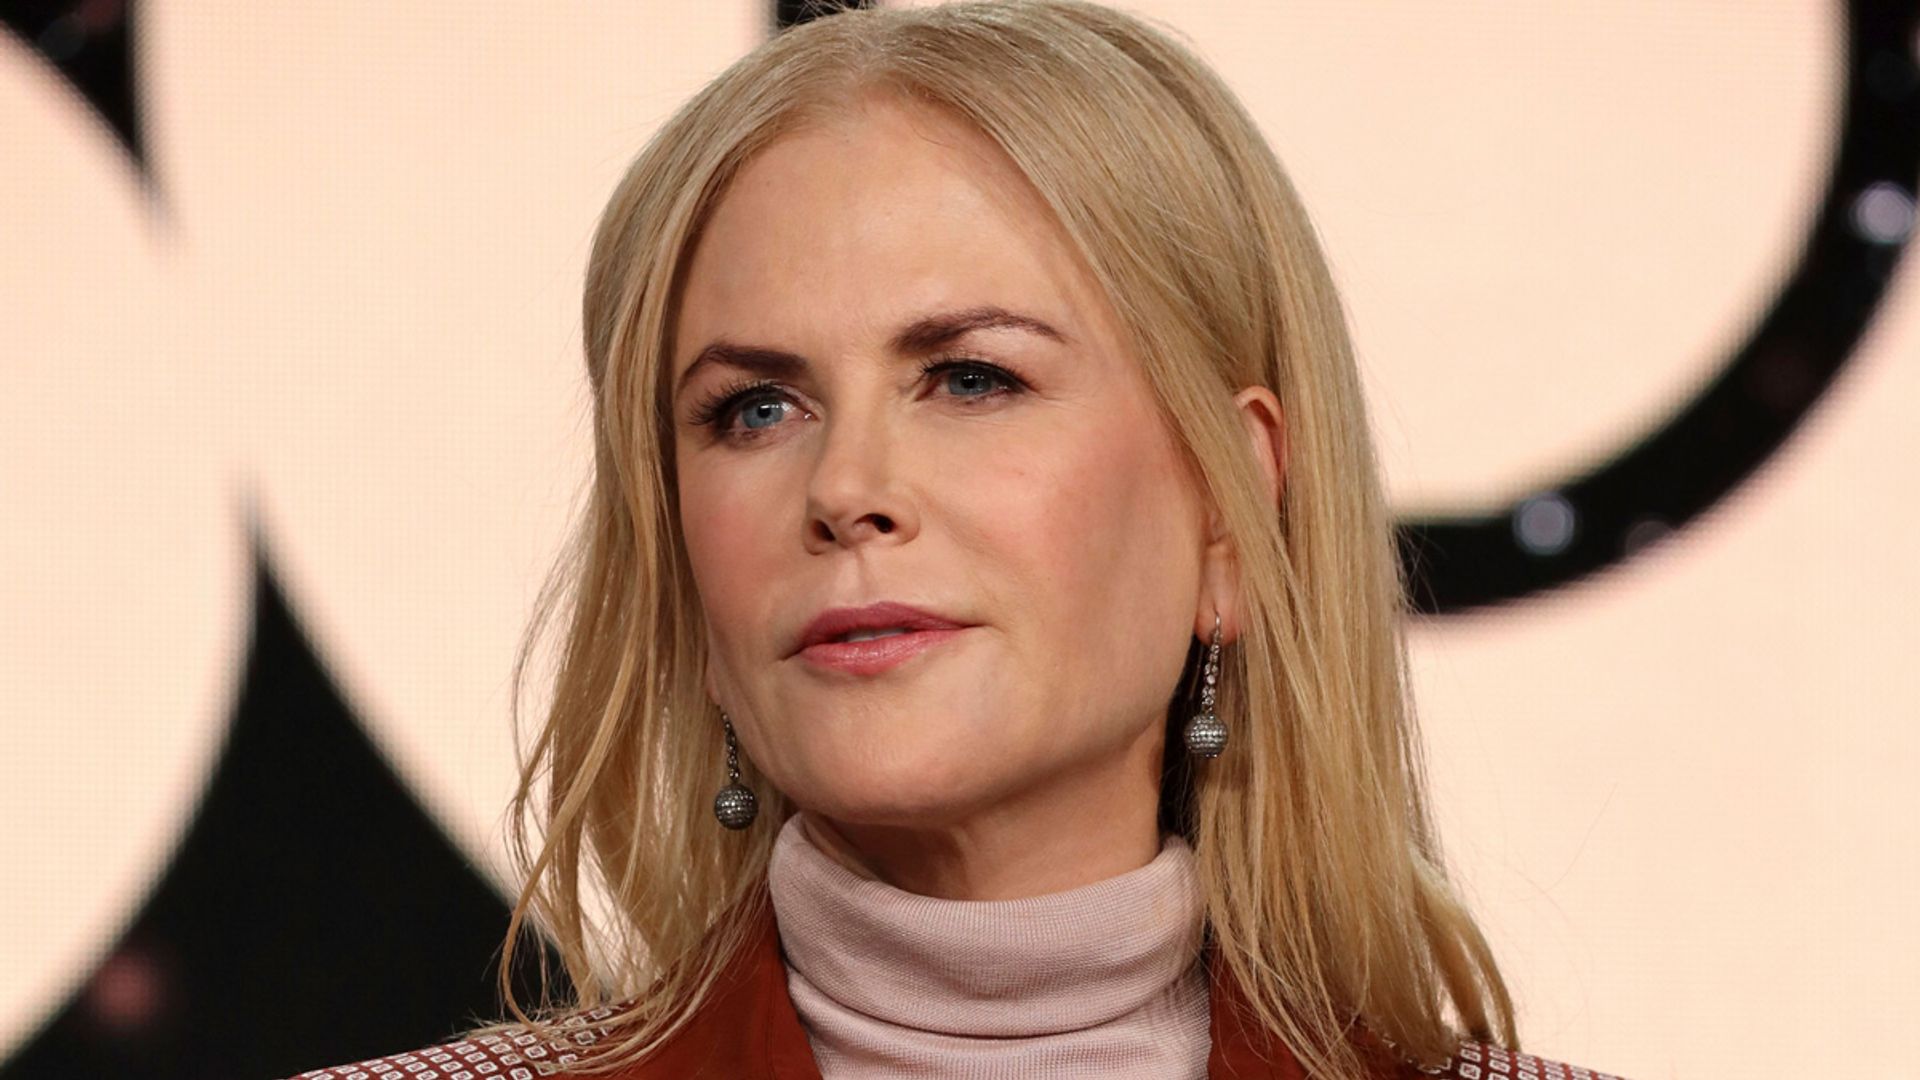 Nicole Kidman left heartbroken and 'shattered' after devastating personal loss